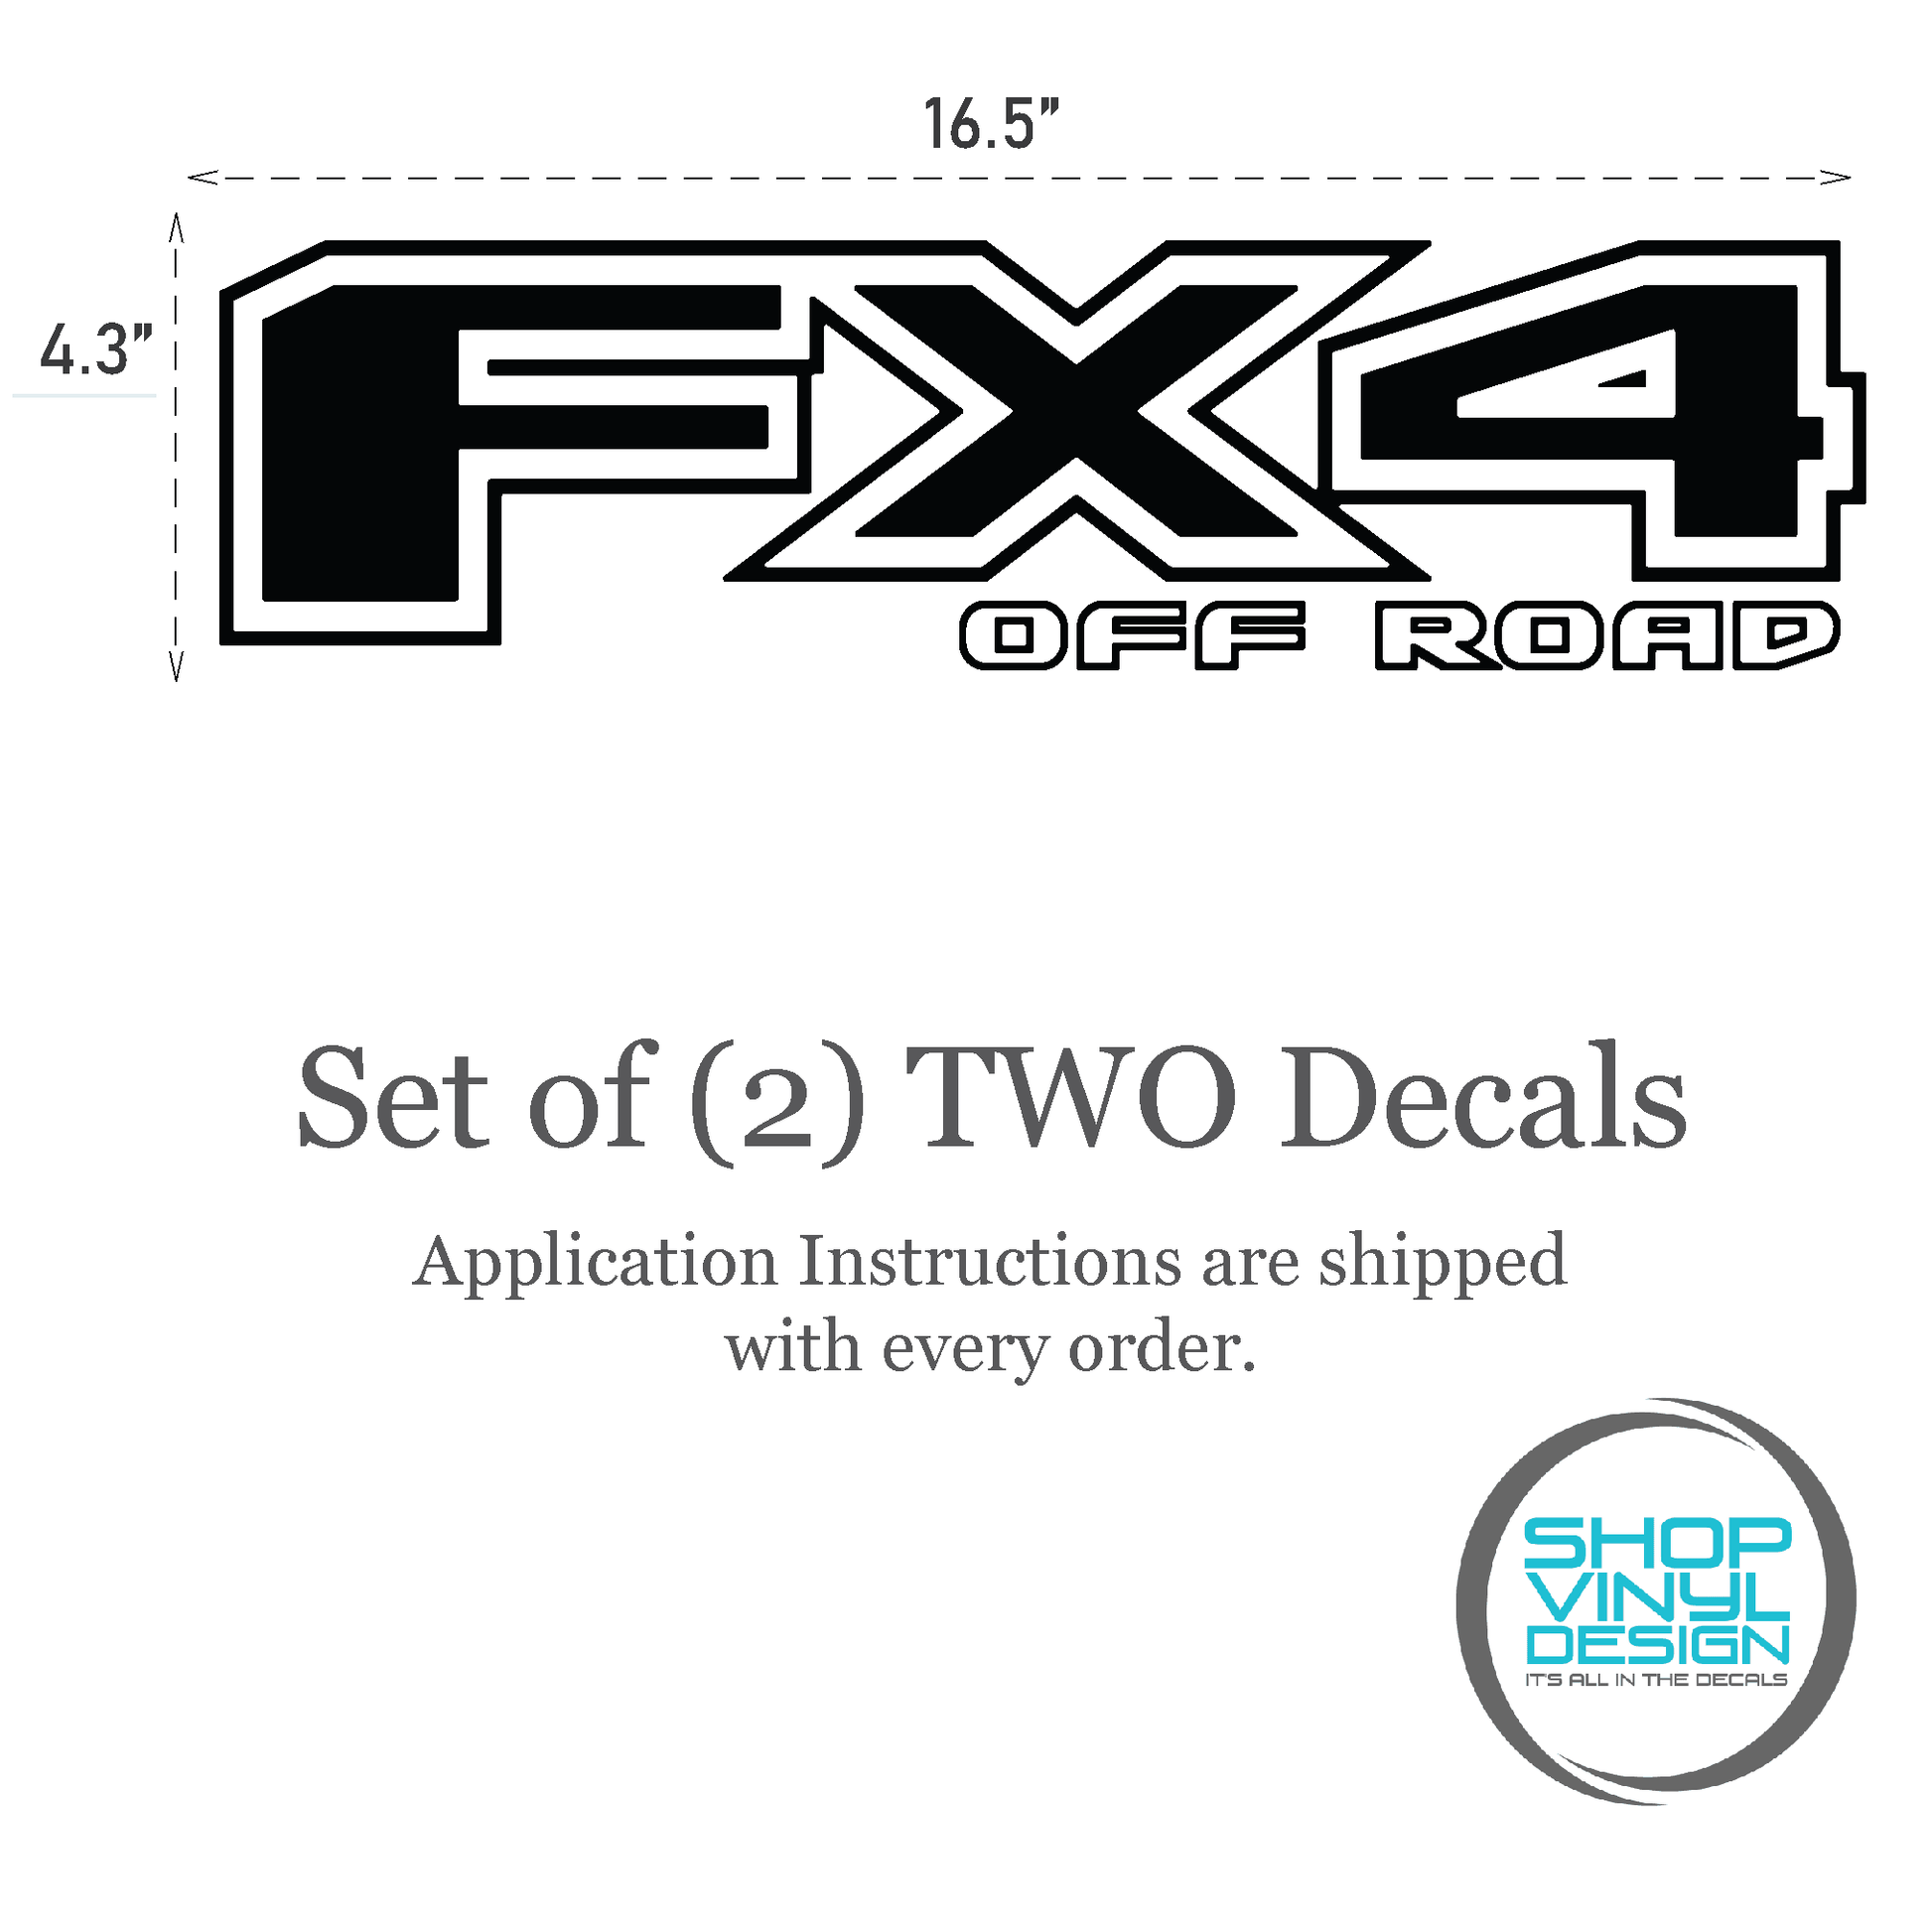 Shop Vinyl Design F-150 F-250 FX4 Off Road Replacement Bedside Decals Vehicle Vinyl Graphic Decal Shop Vinyl Design decals stickers